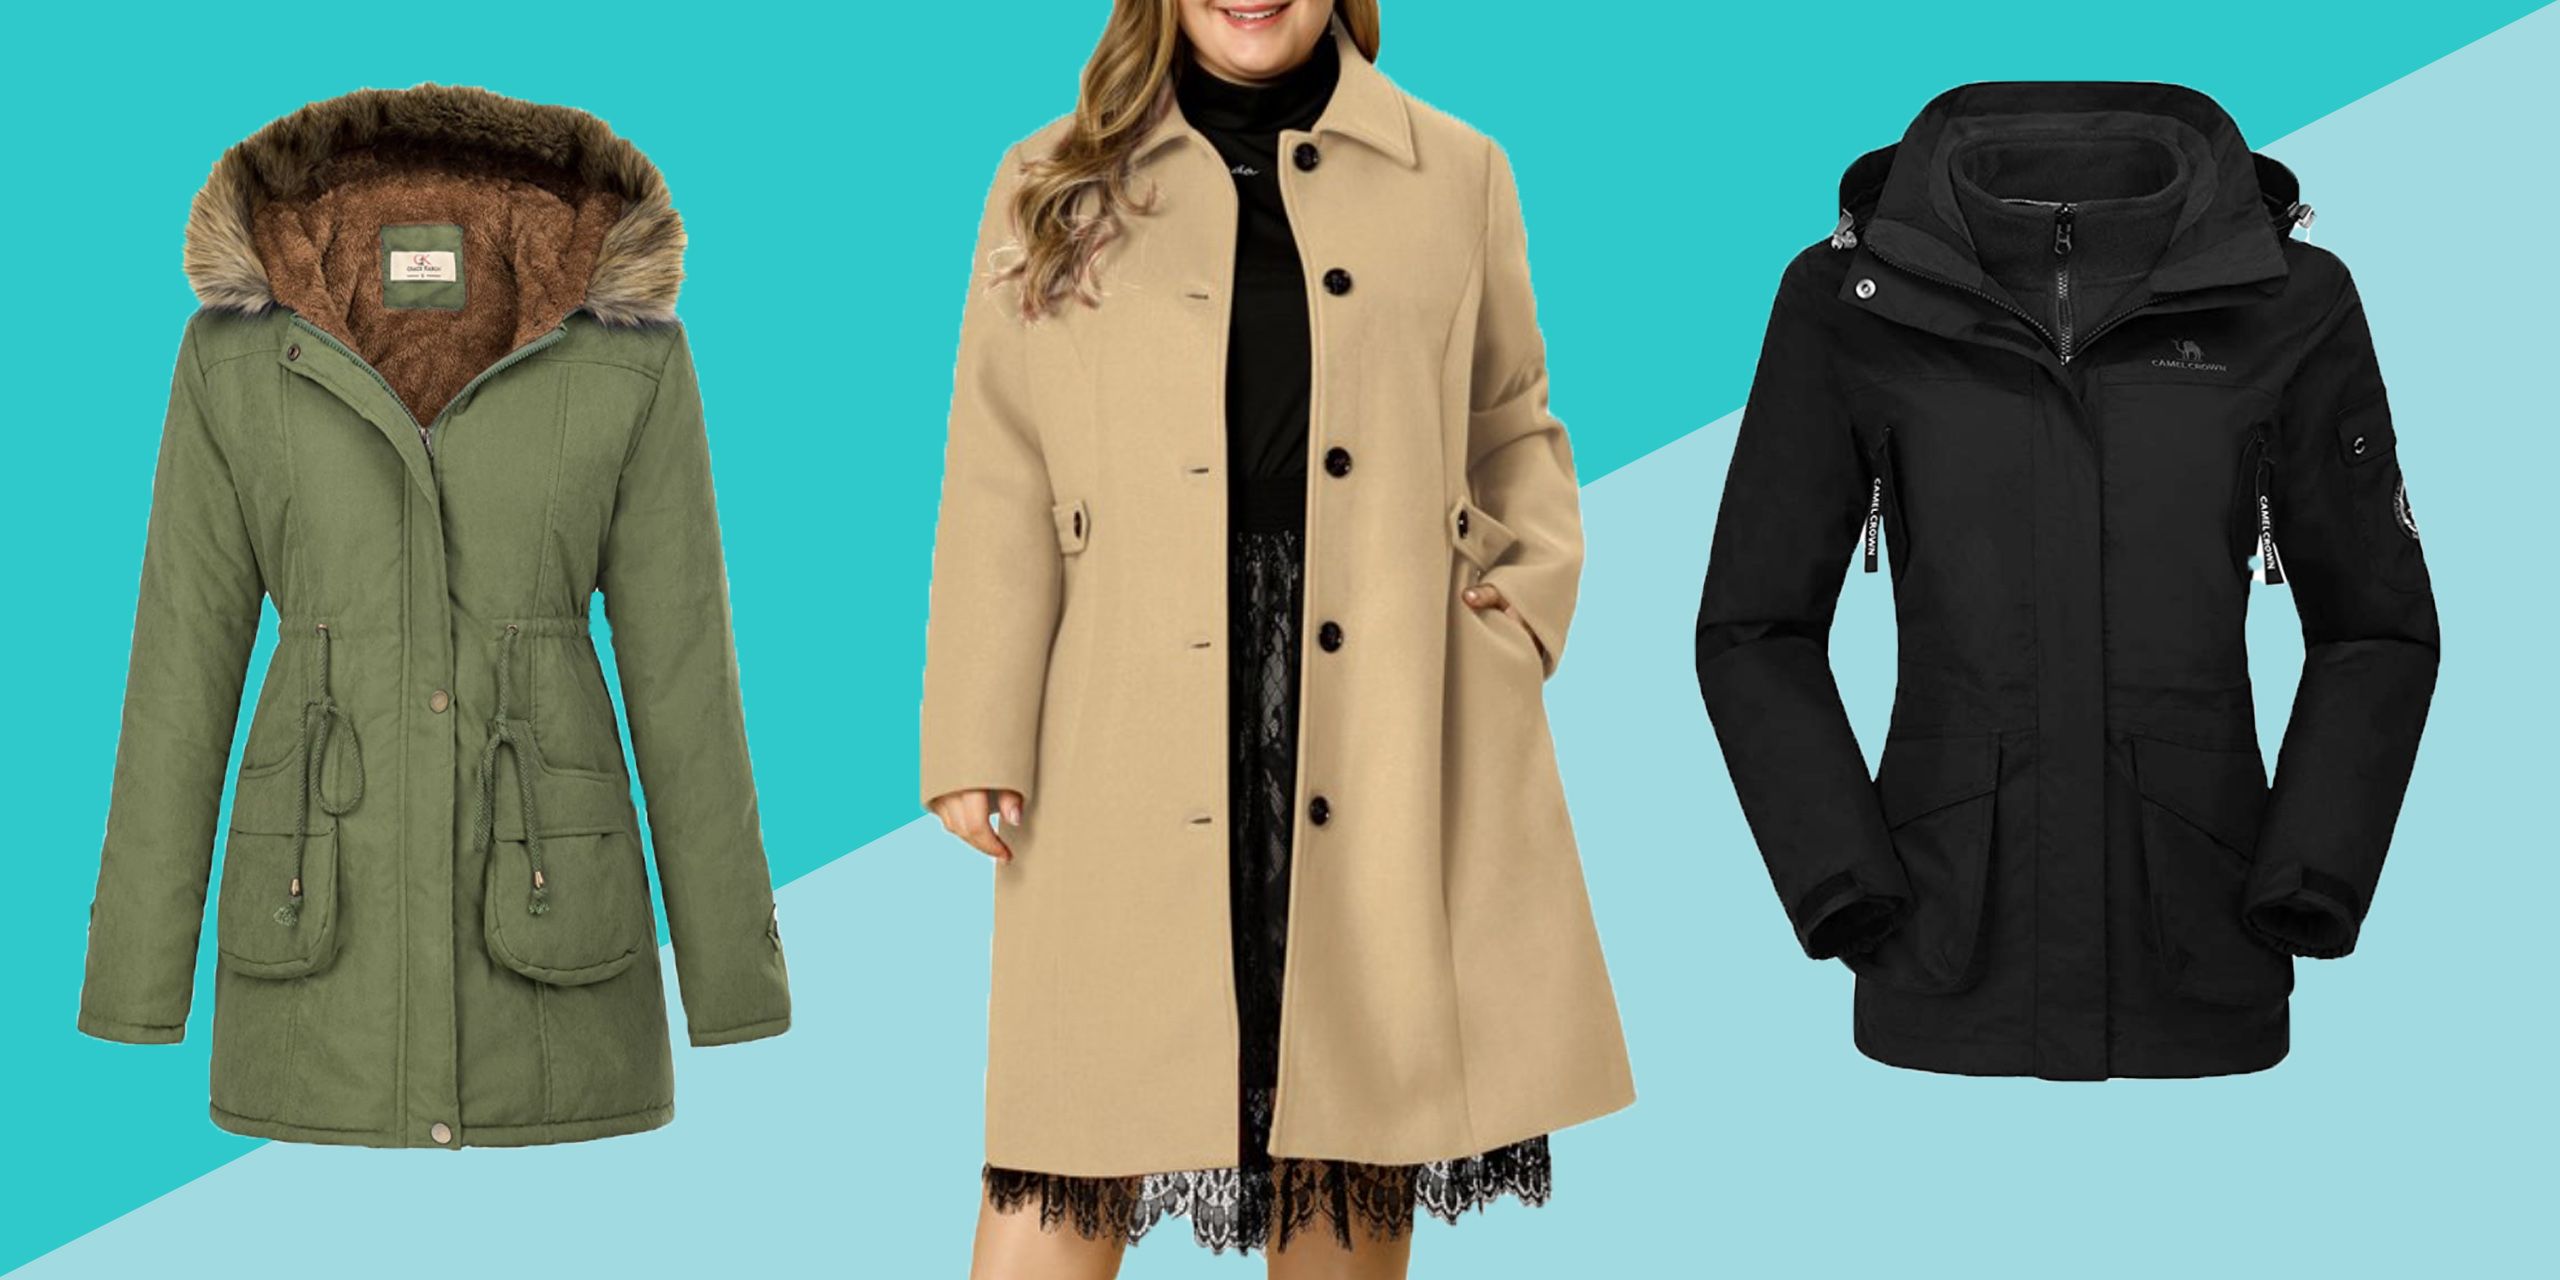 Fleece Lined Jacket Women with Fur Hood Plus Size Winter Coat Big Collar Sweaters Slim Fit Warm Hoodie Jackets